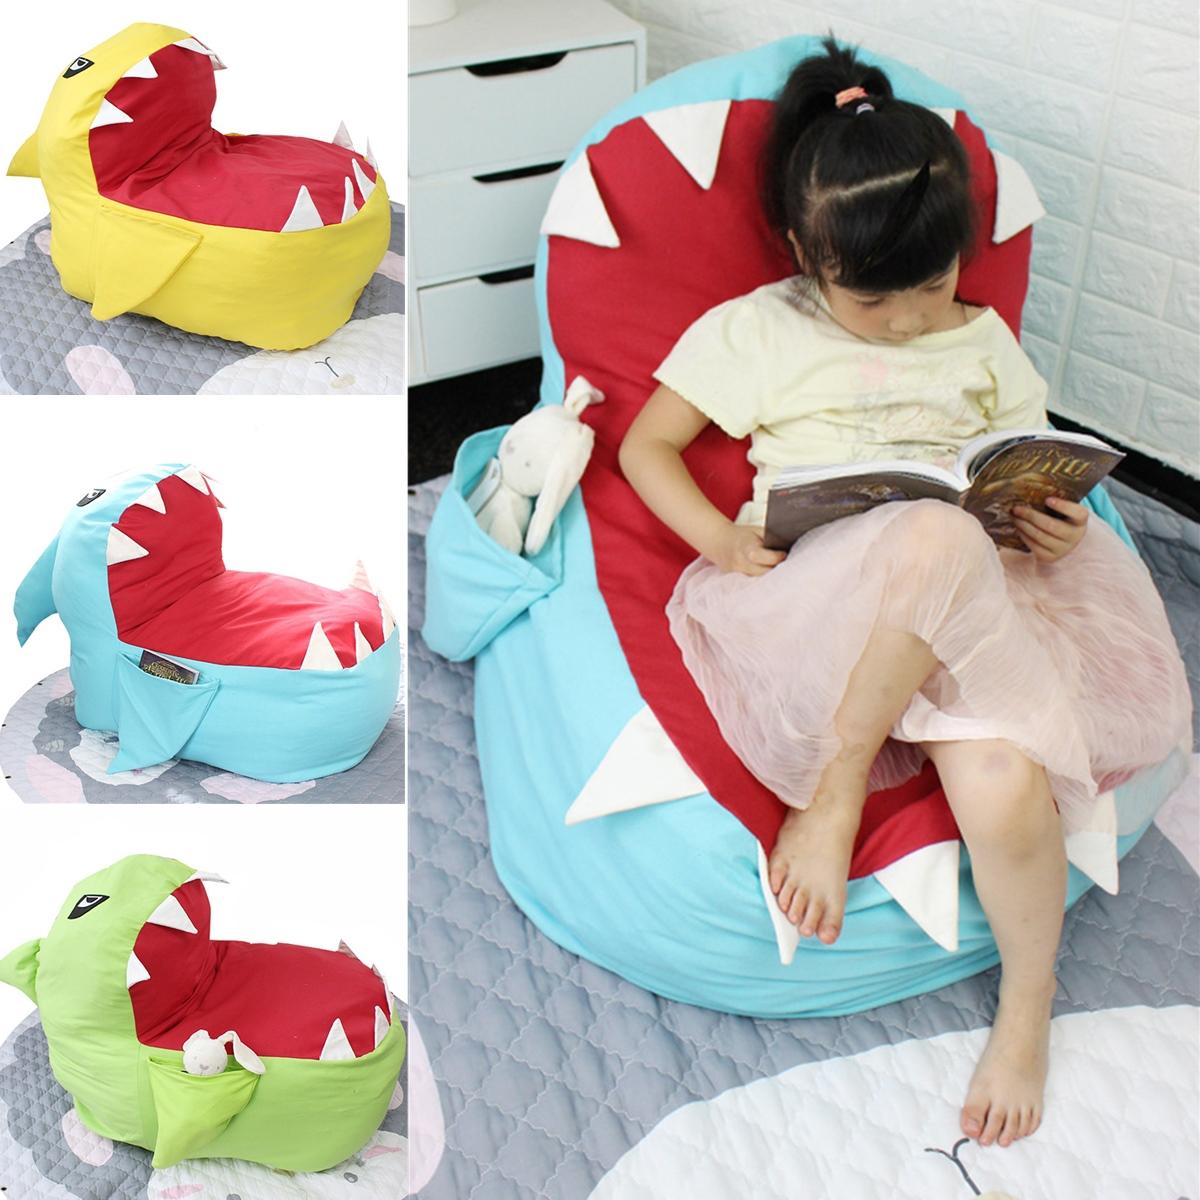 

Large Giant Huge Shark Stuffed Animal Plush Soft Toy Pillow Sofa Bean Bag Lazy Sofa